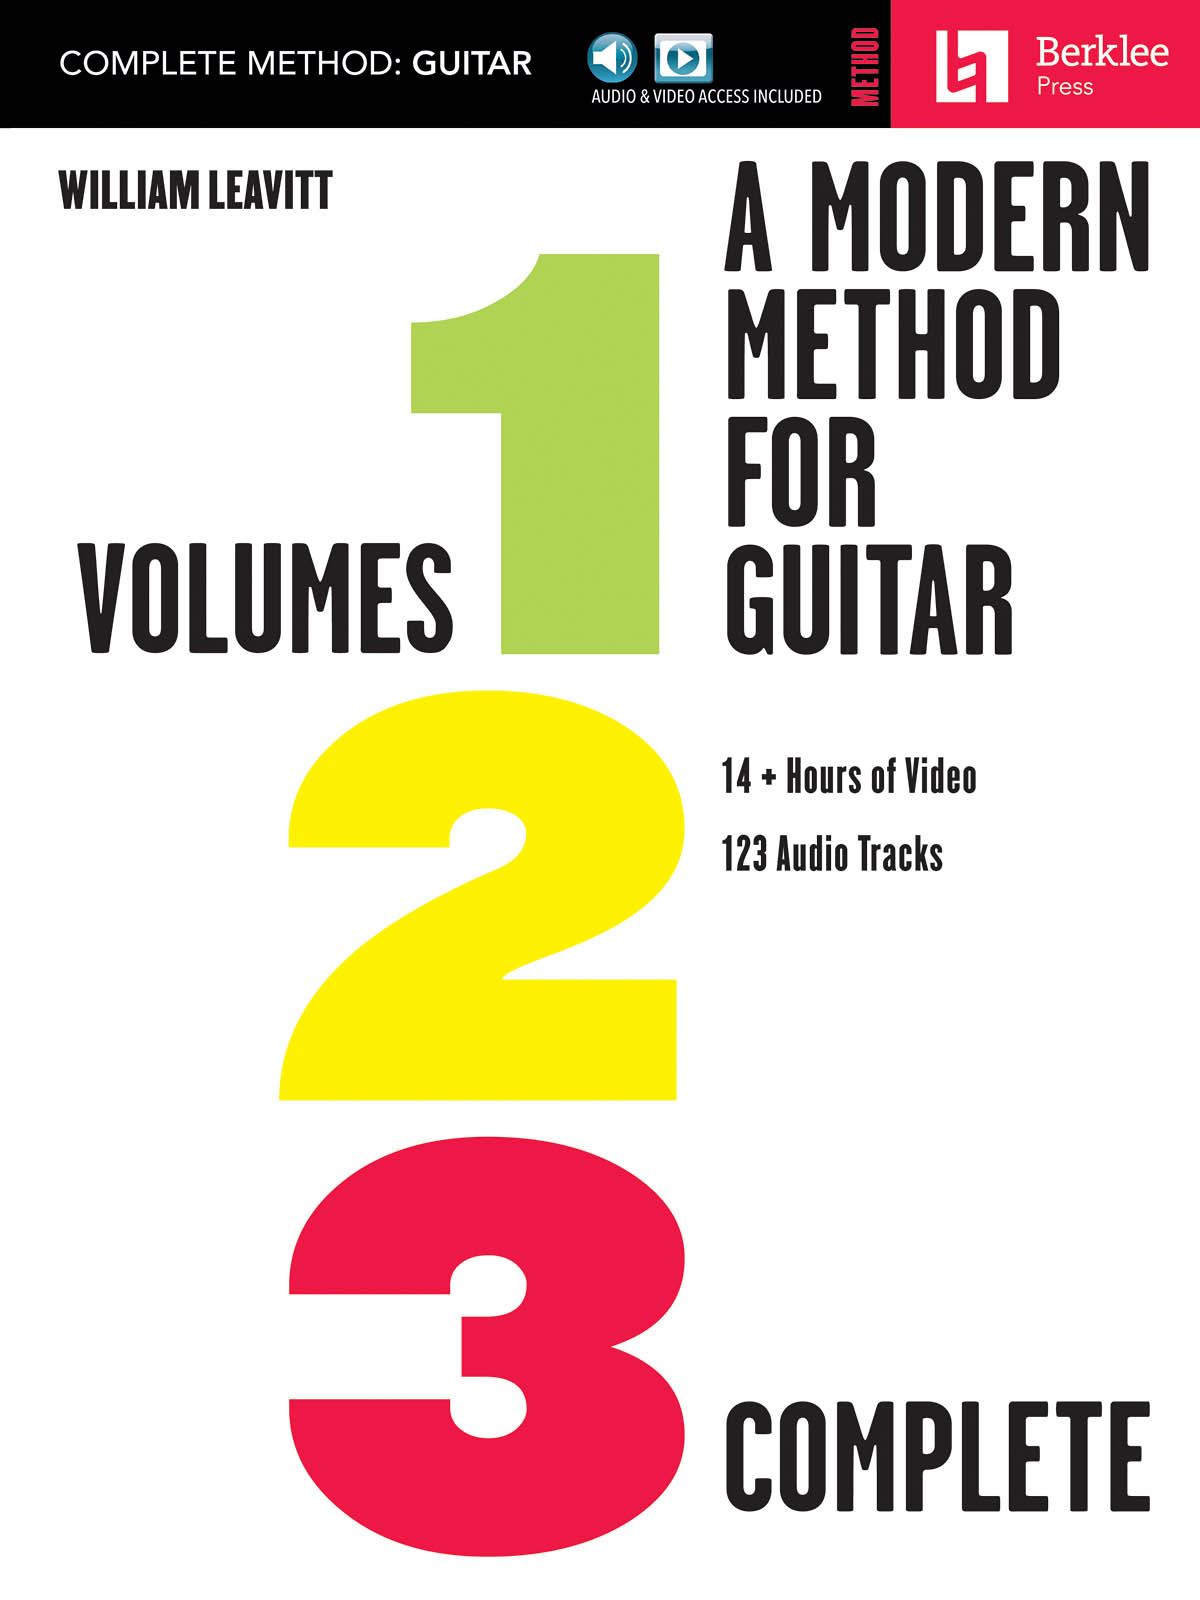 A Modern Method For Guitar - Complete Method